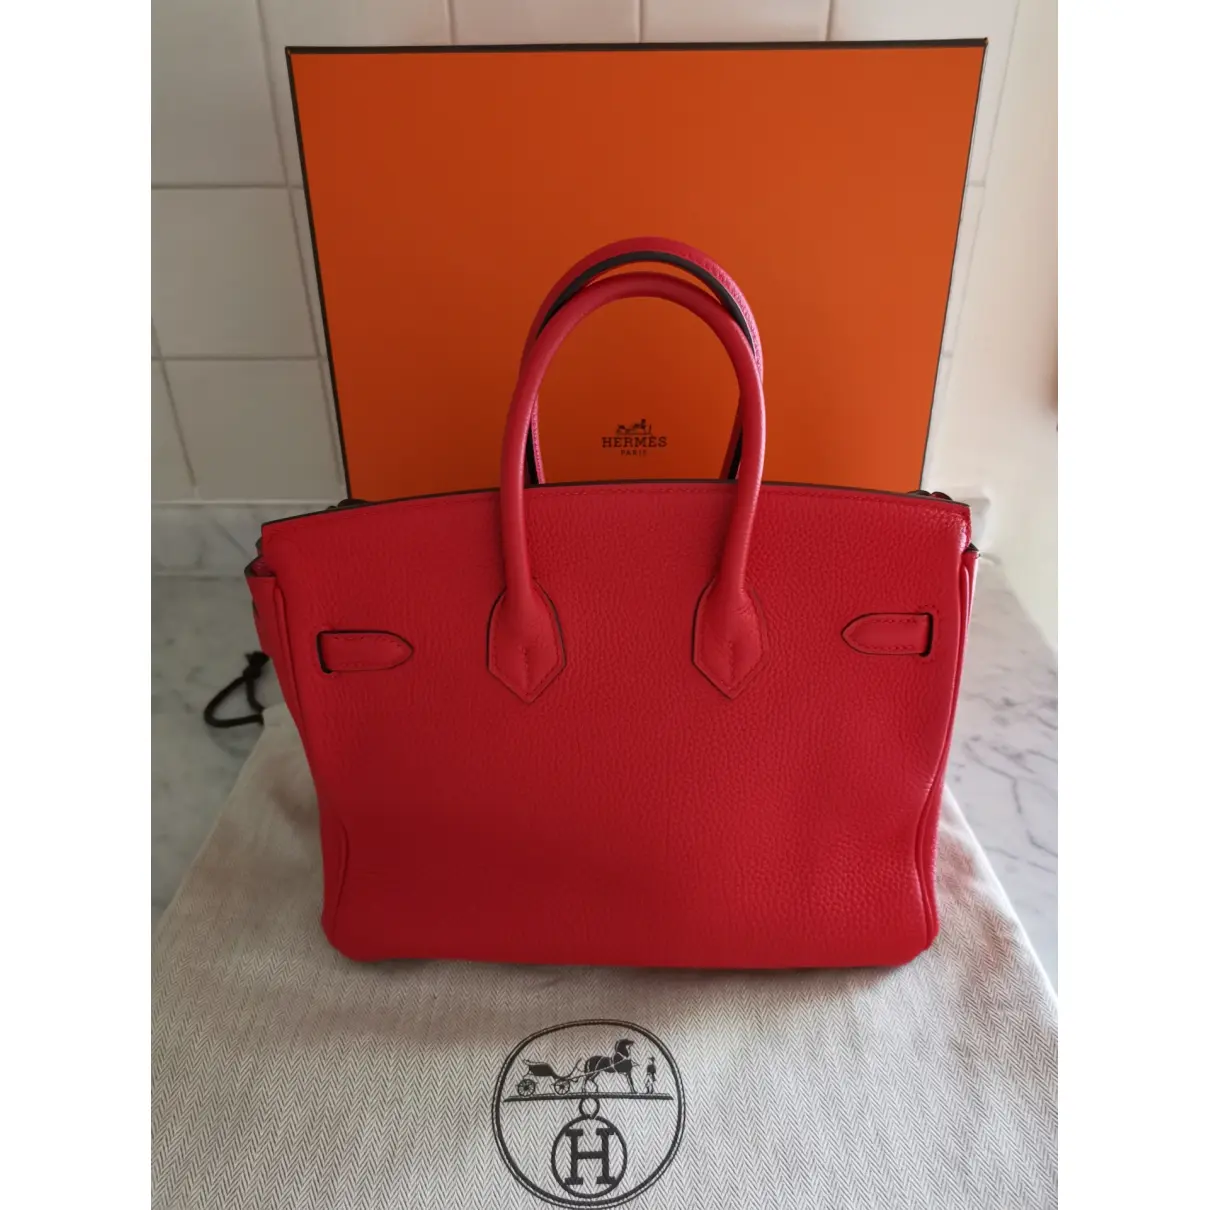 Buy Hermès Birkin 25 leather handbag online